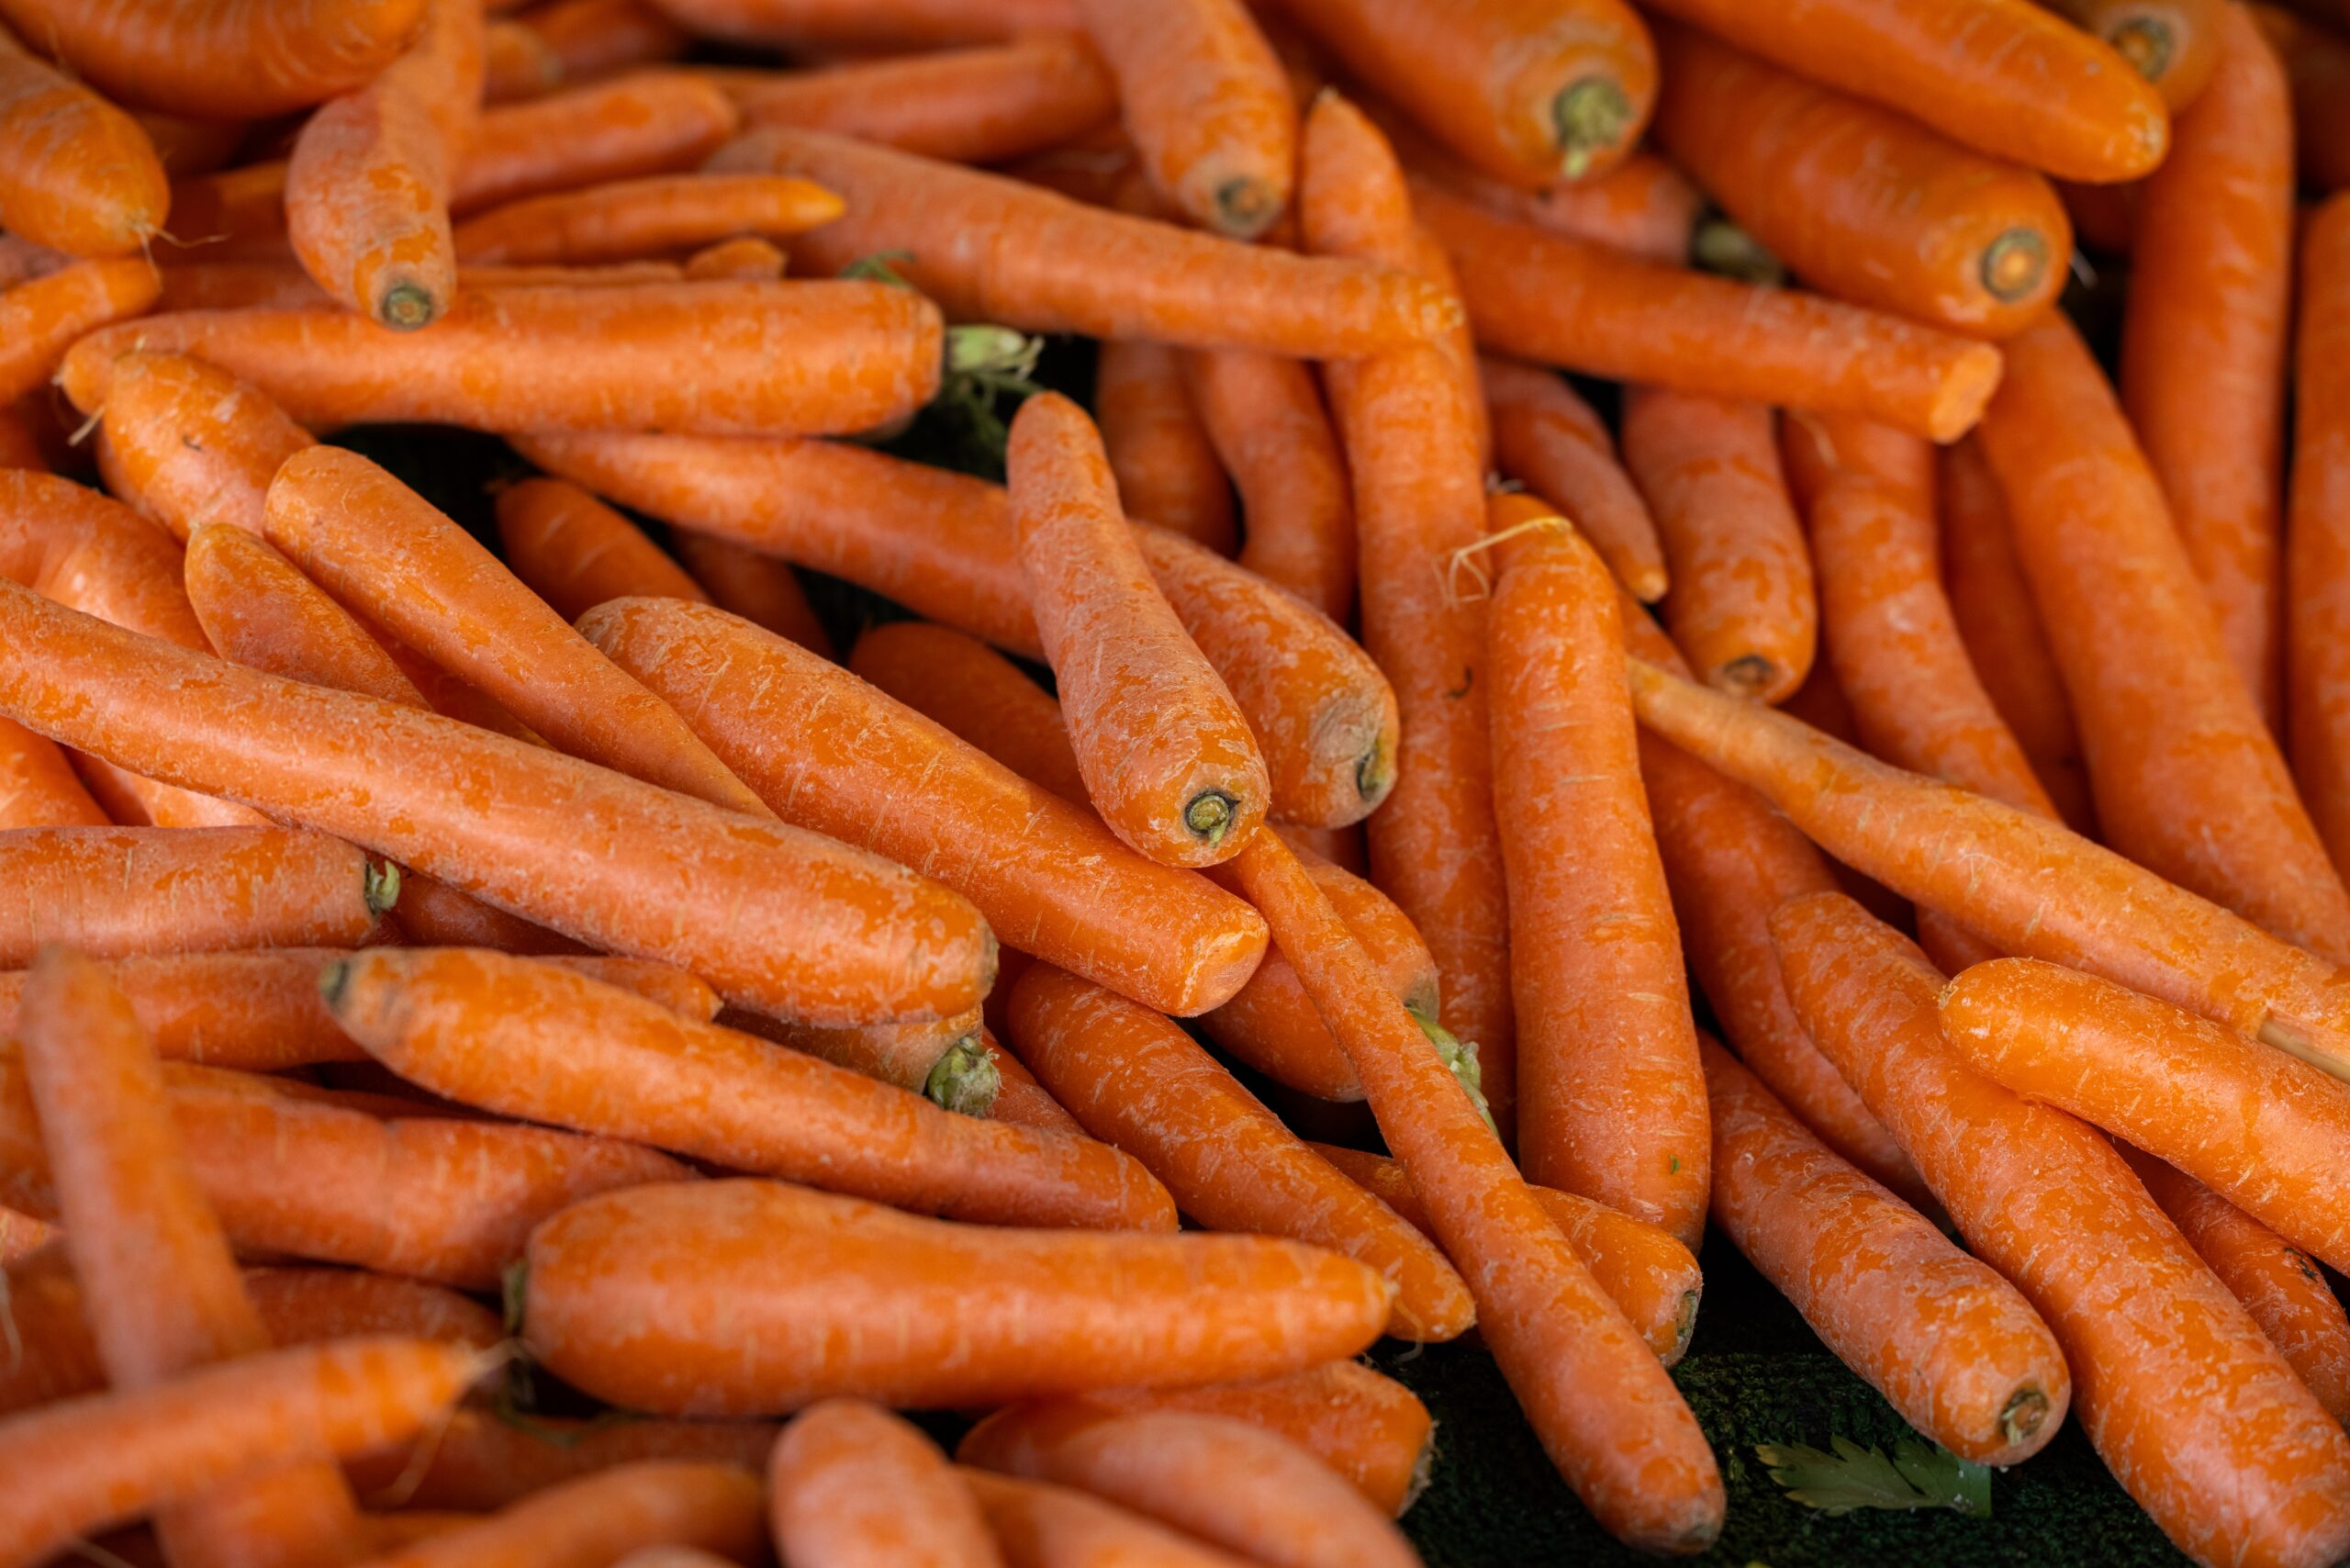 Carrots for eyes